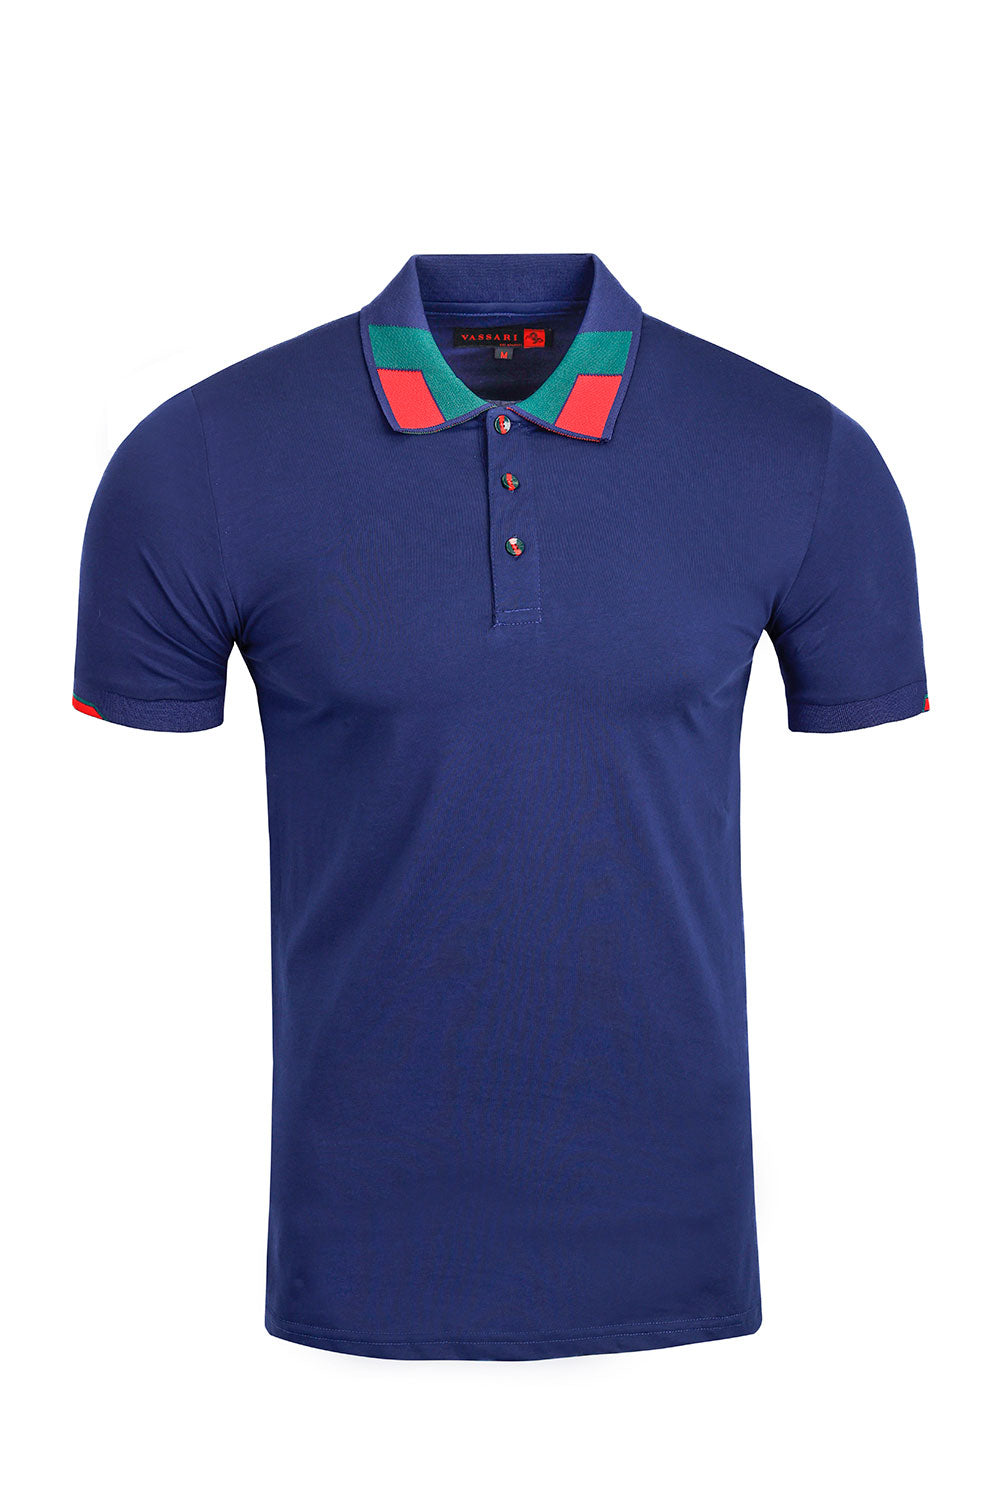 Vassari Men's Collar Color Pattern Stretch Polo Shirt 3VP636 Navy